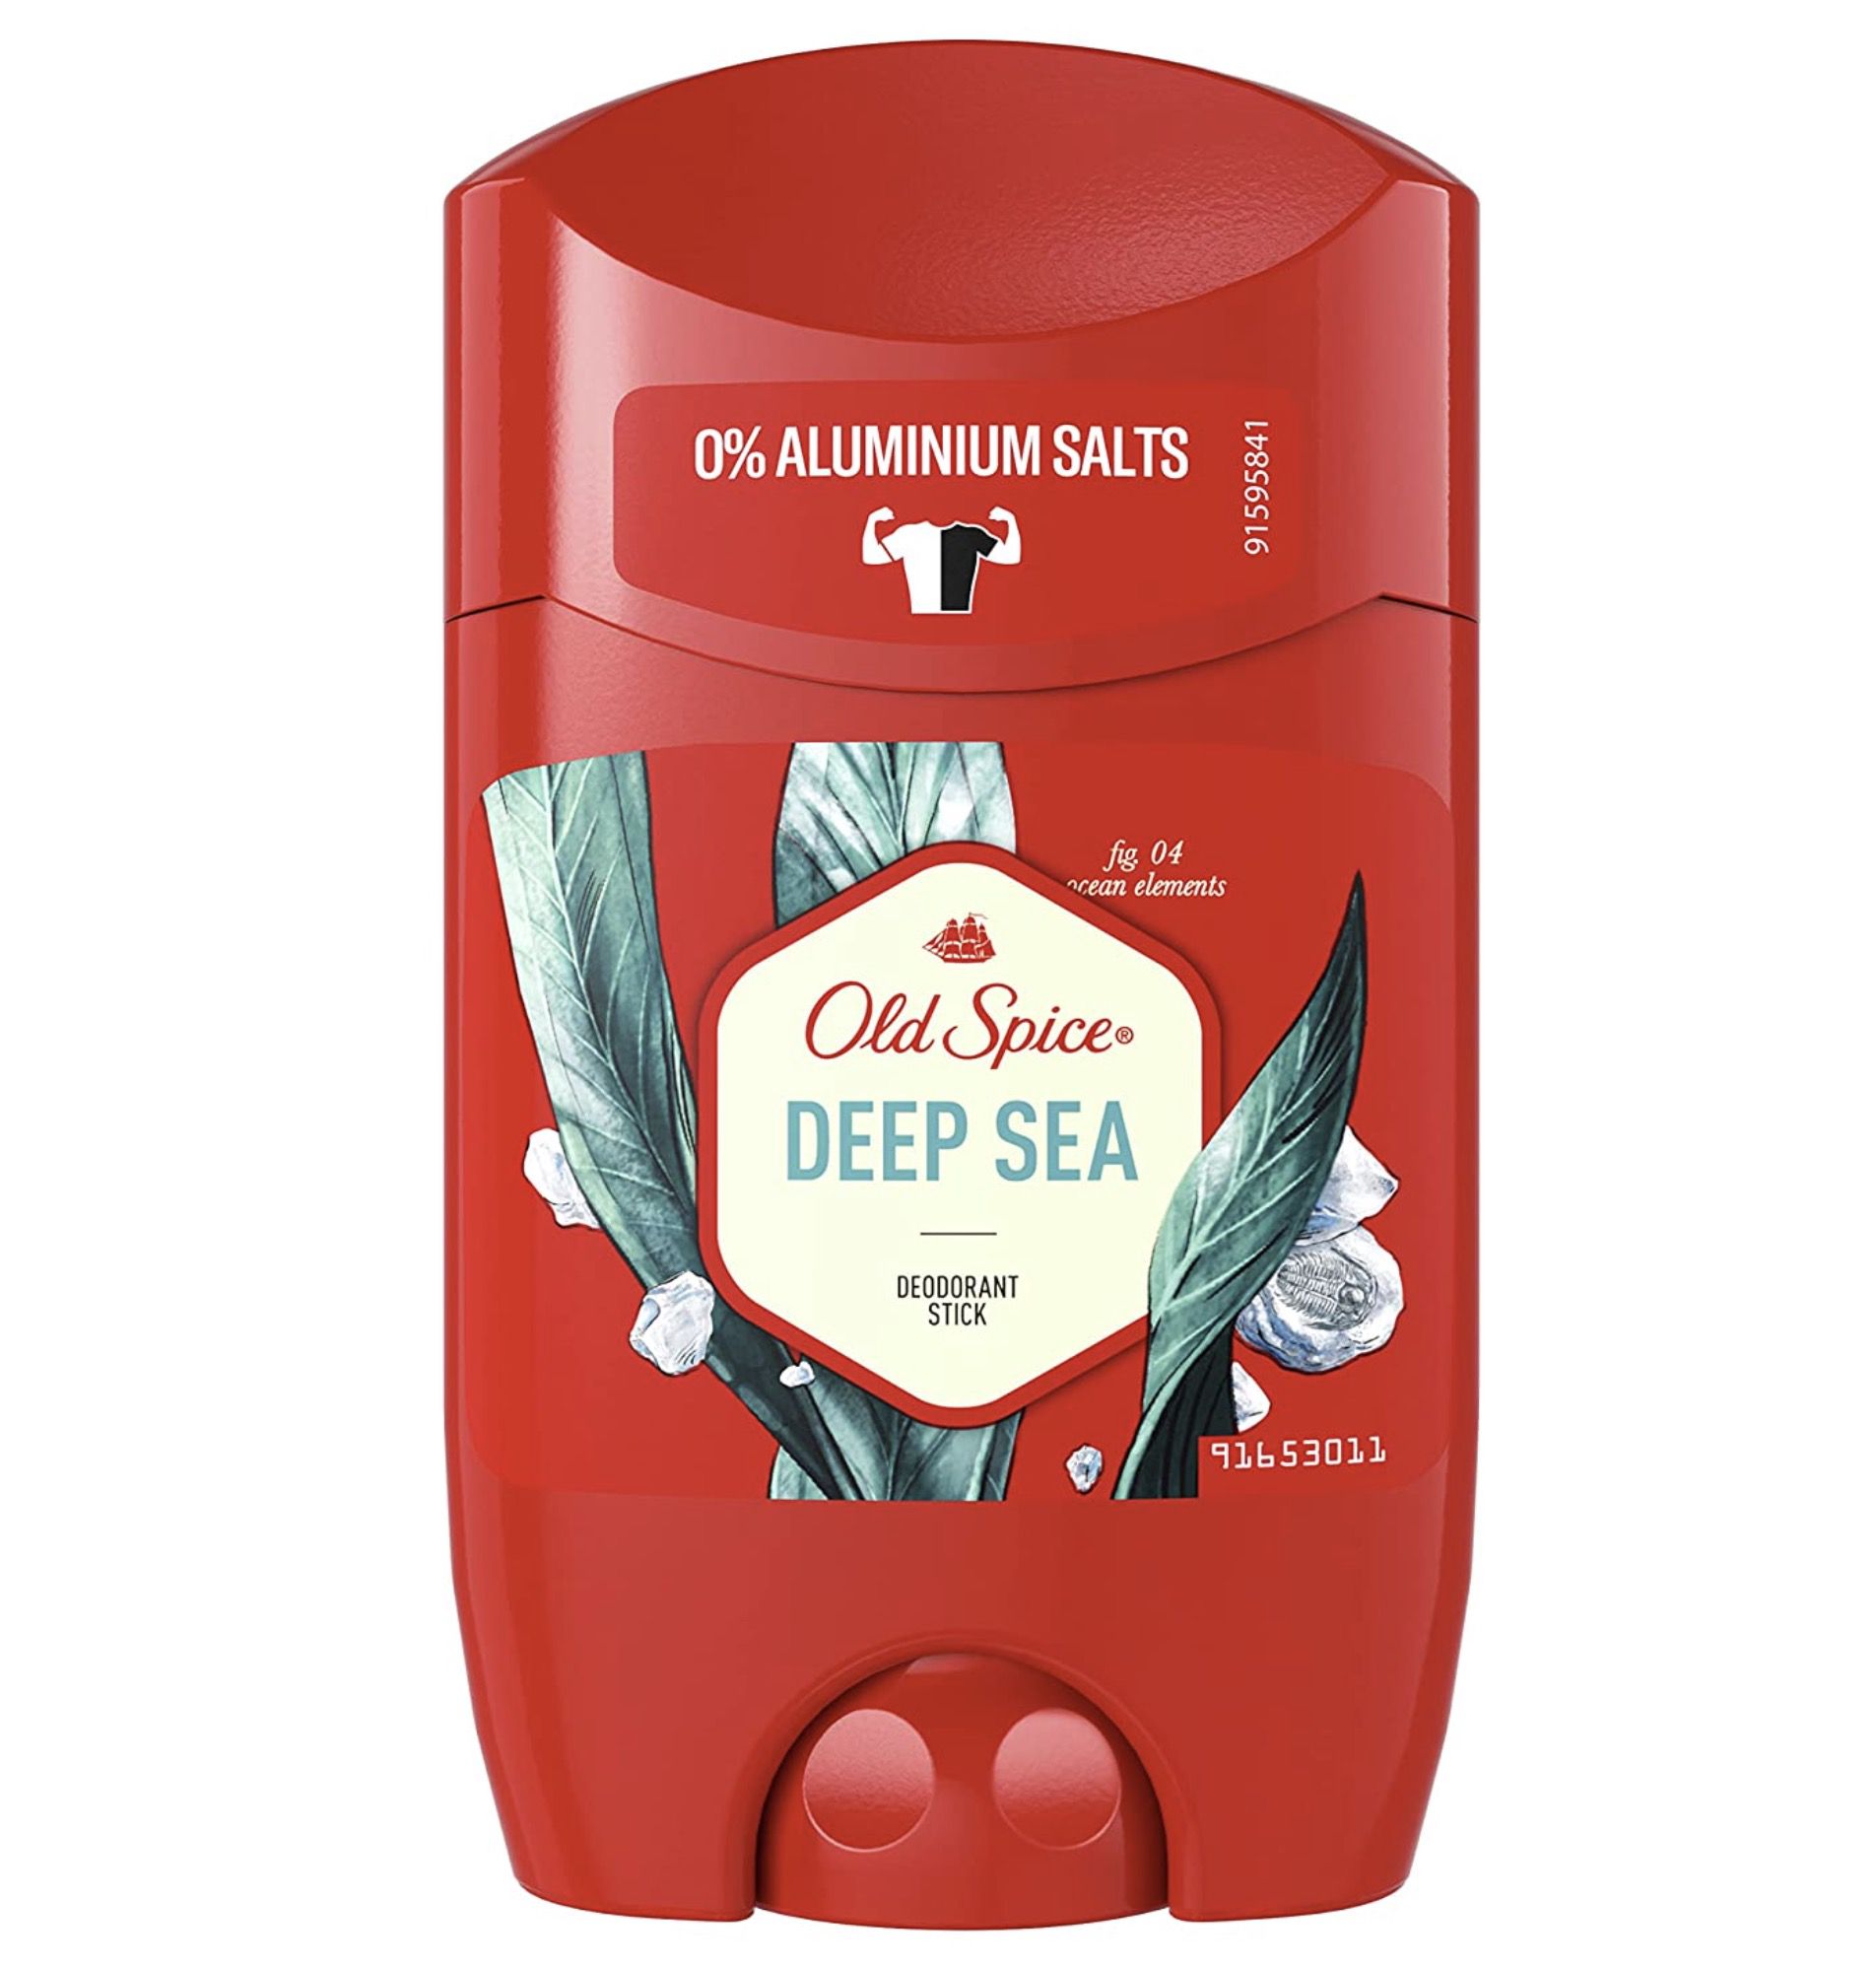 Old Spice Deep Sea Deodorant Stick ab 2,33€ (statt 3€)